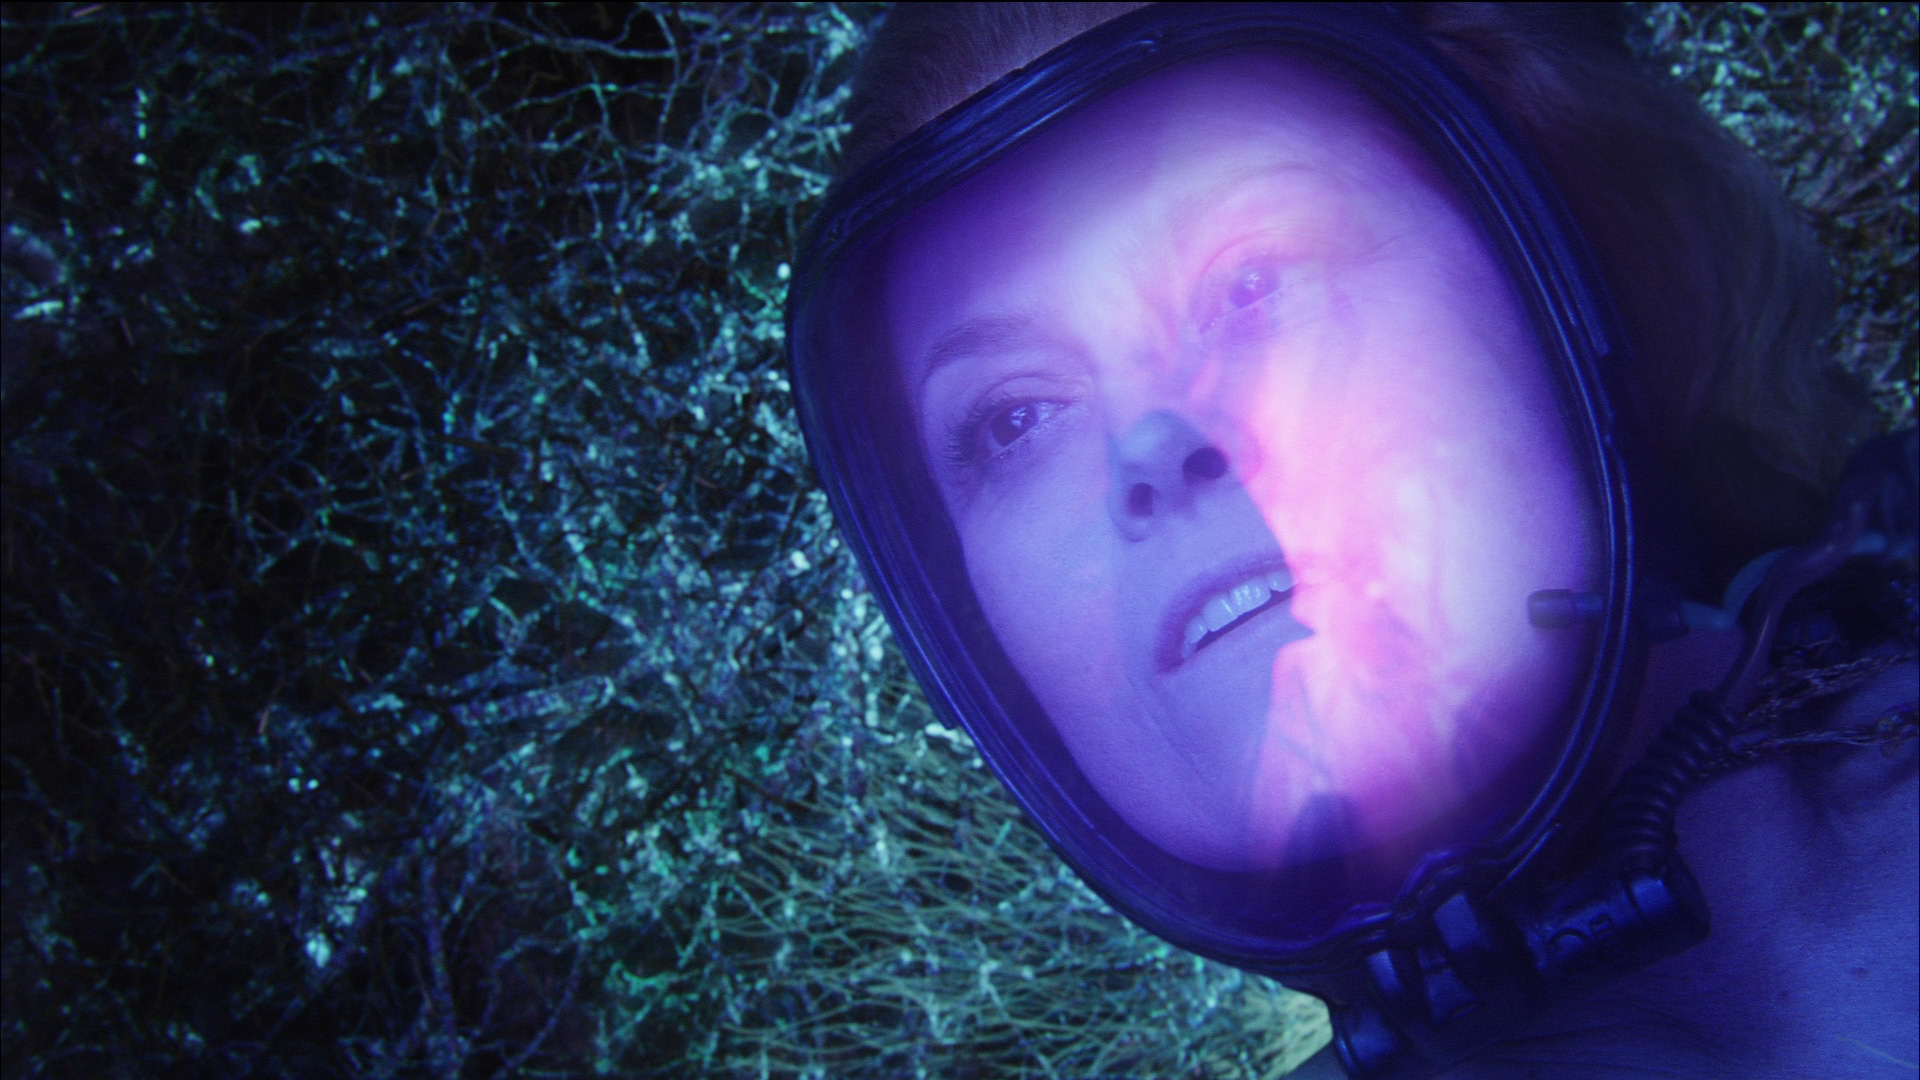 Sigourney Weaver in Avatar